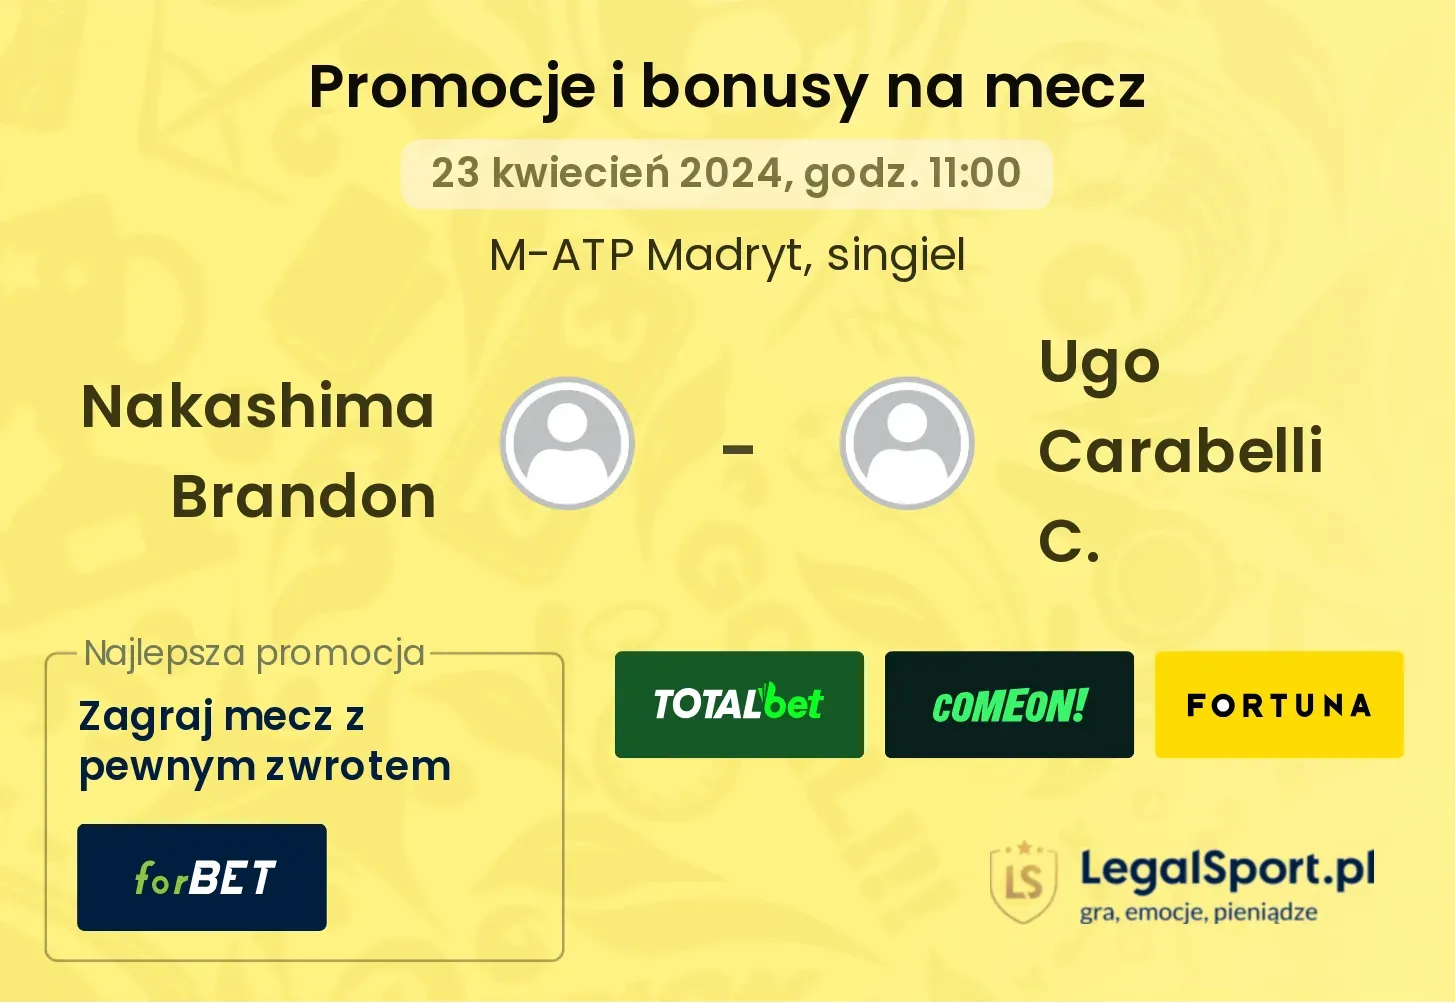 Nakashima Brandon - Ugo Carabelli C. promocje bonusy na mecz